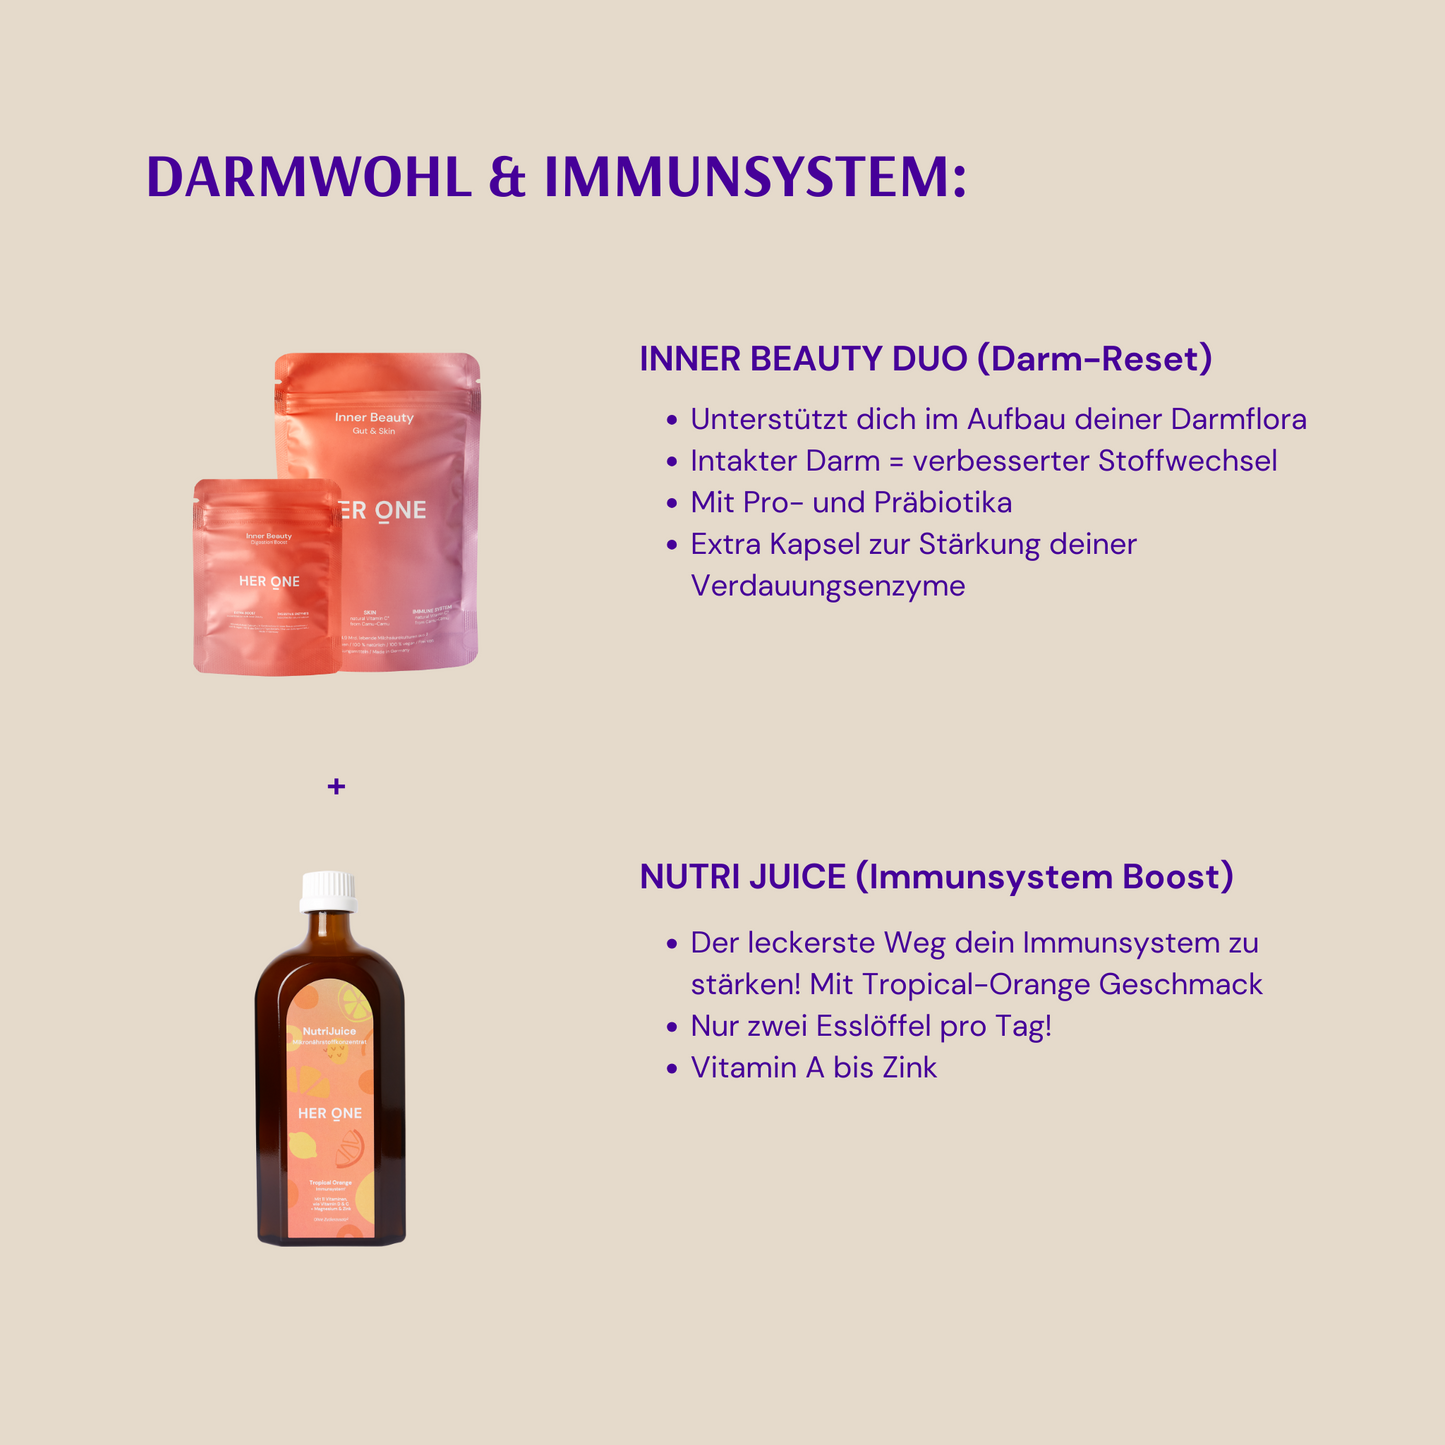 Darmwohl & Immunsystem Set